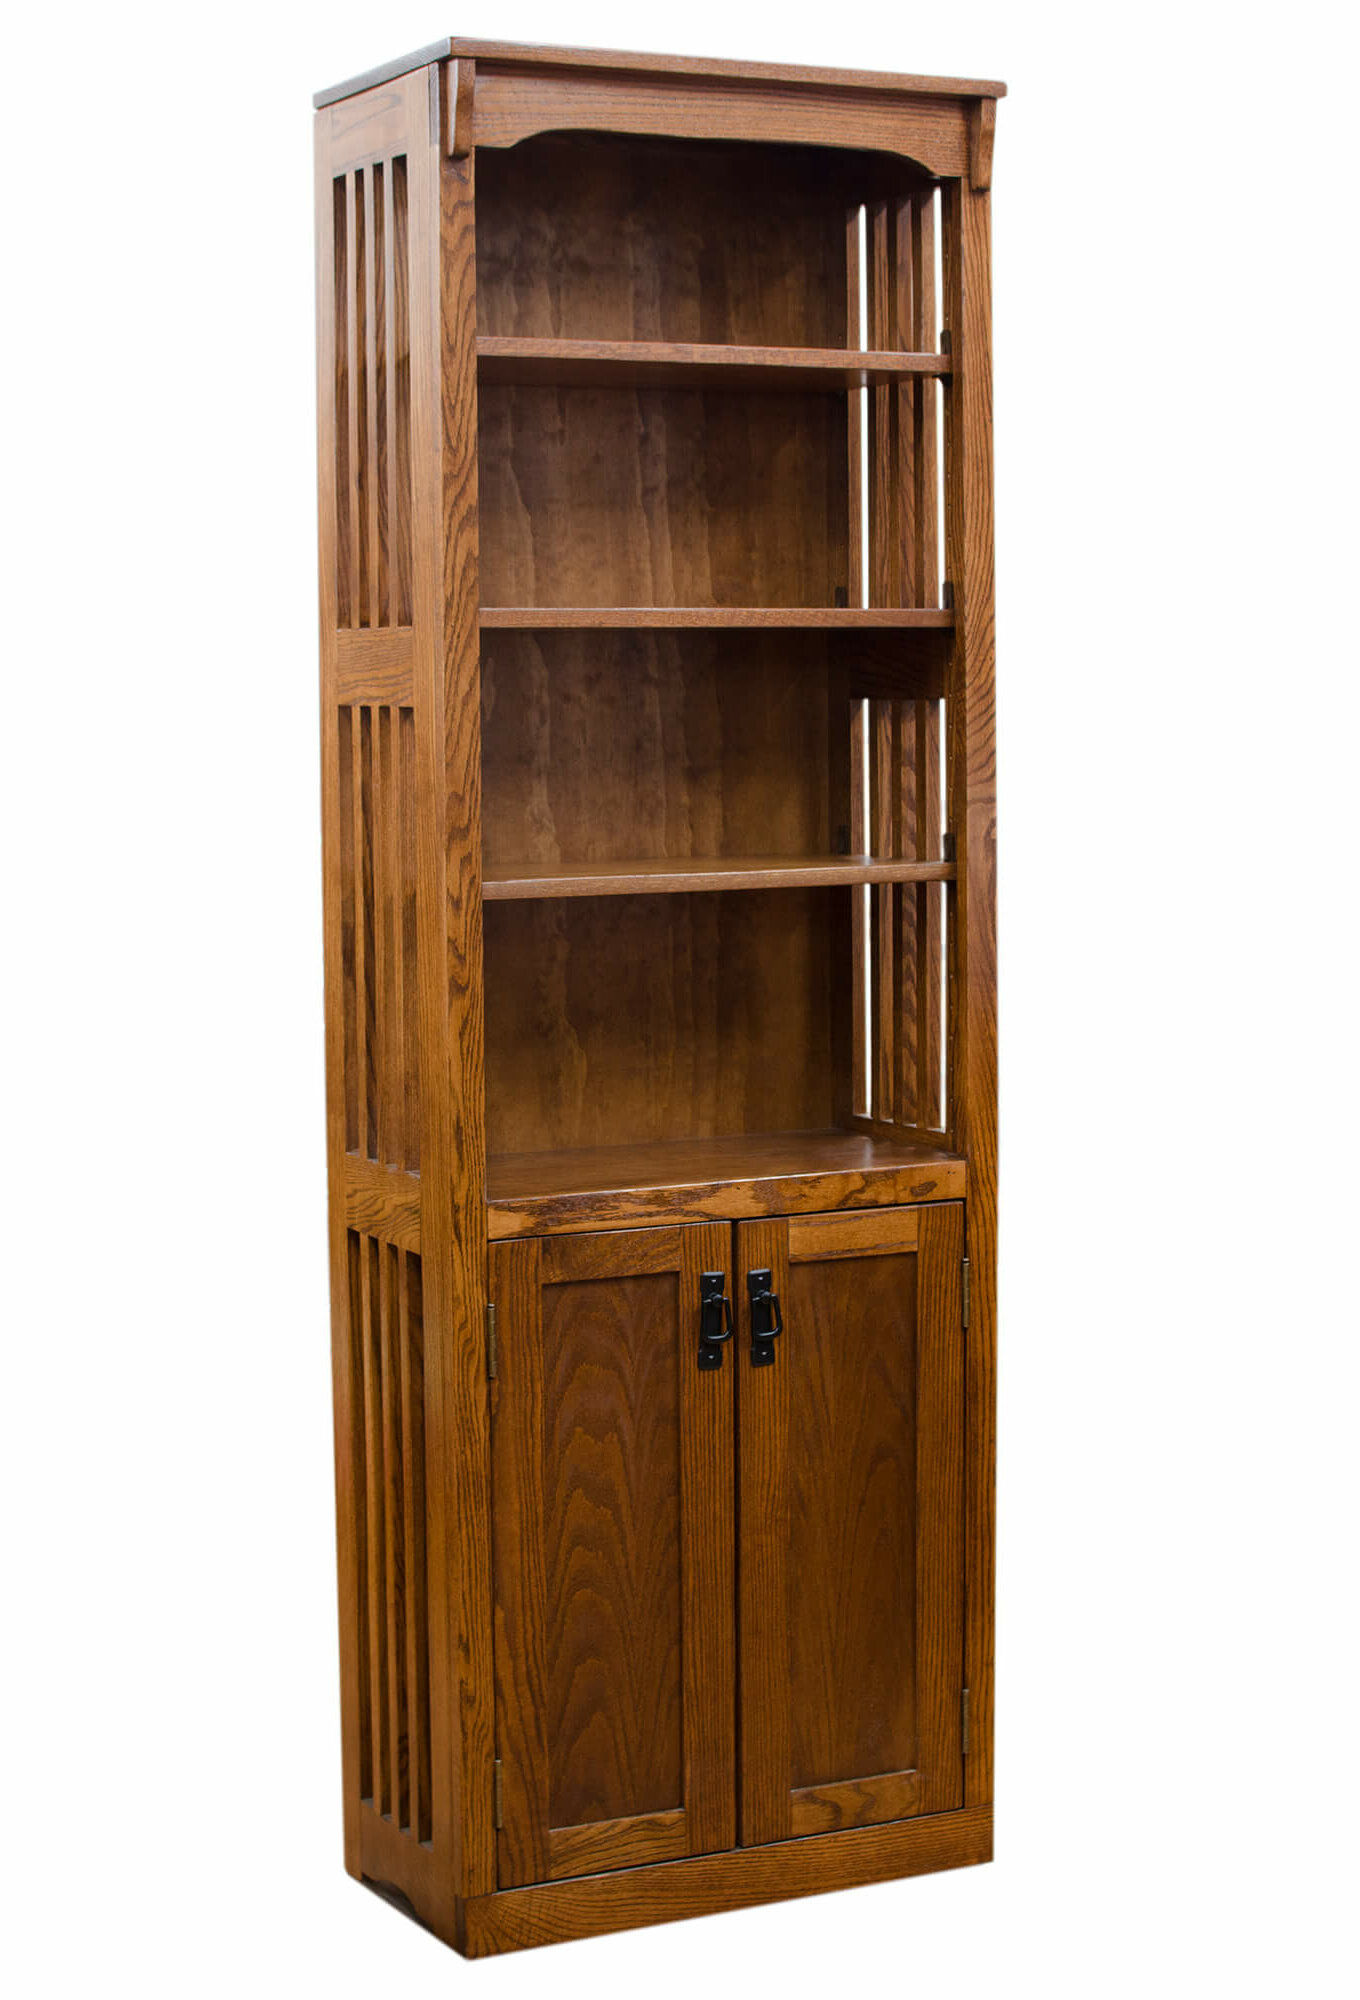 Loon Peak Whittaker Mission Spindle Standard Bookcase Wayfair